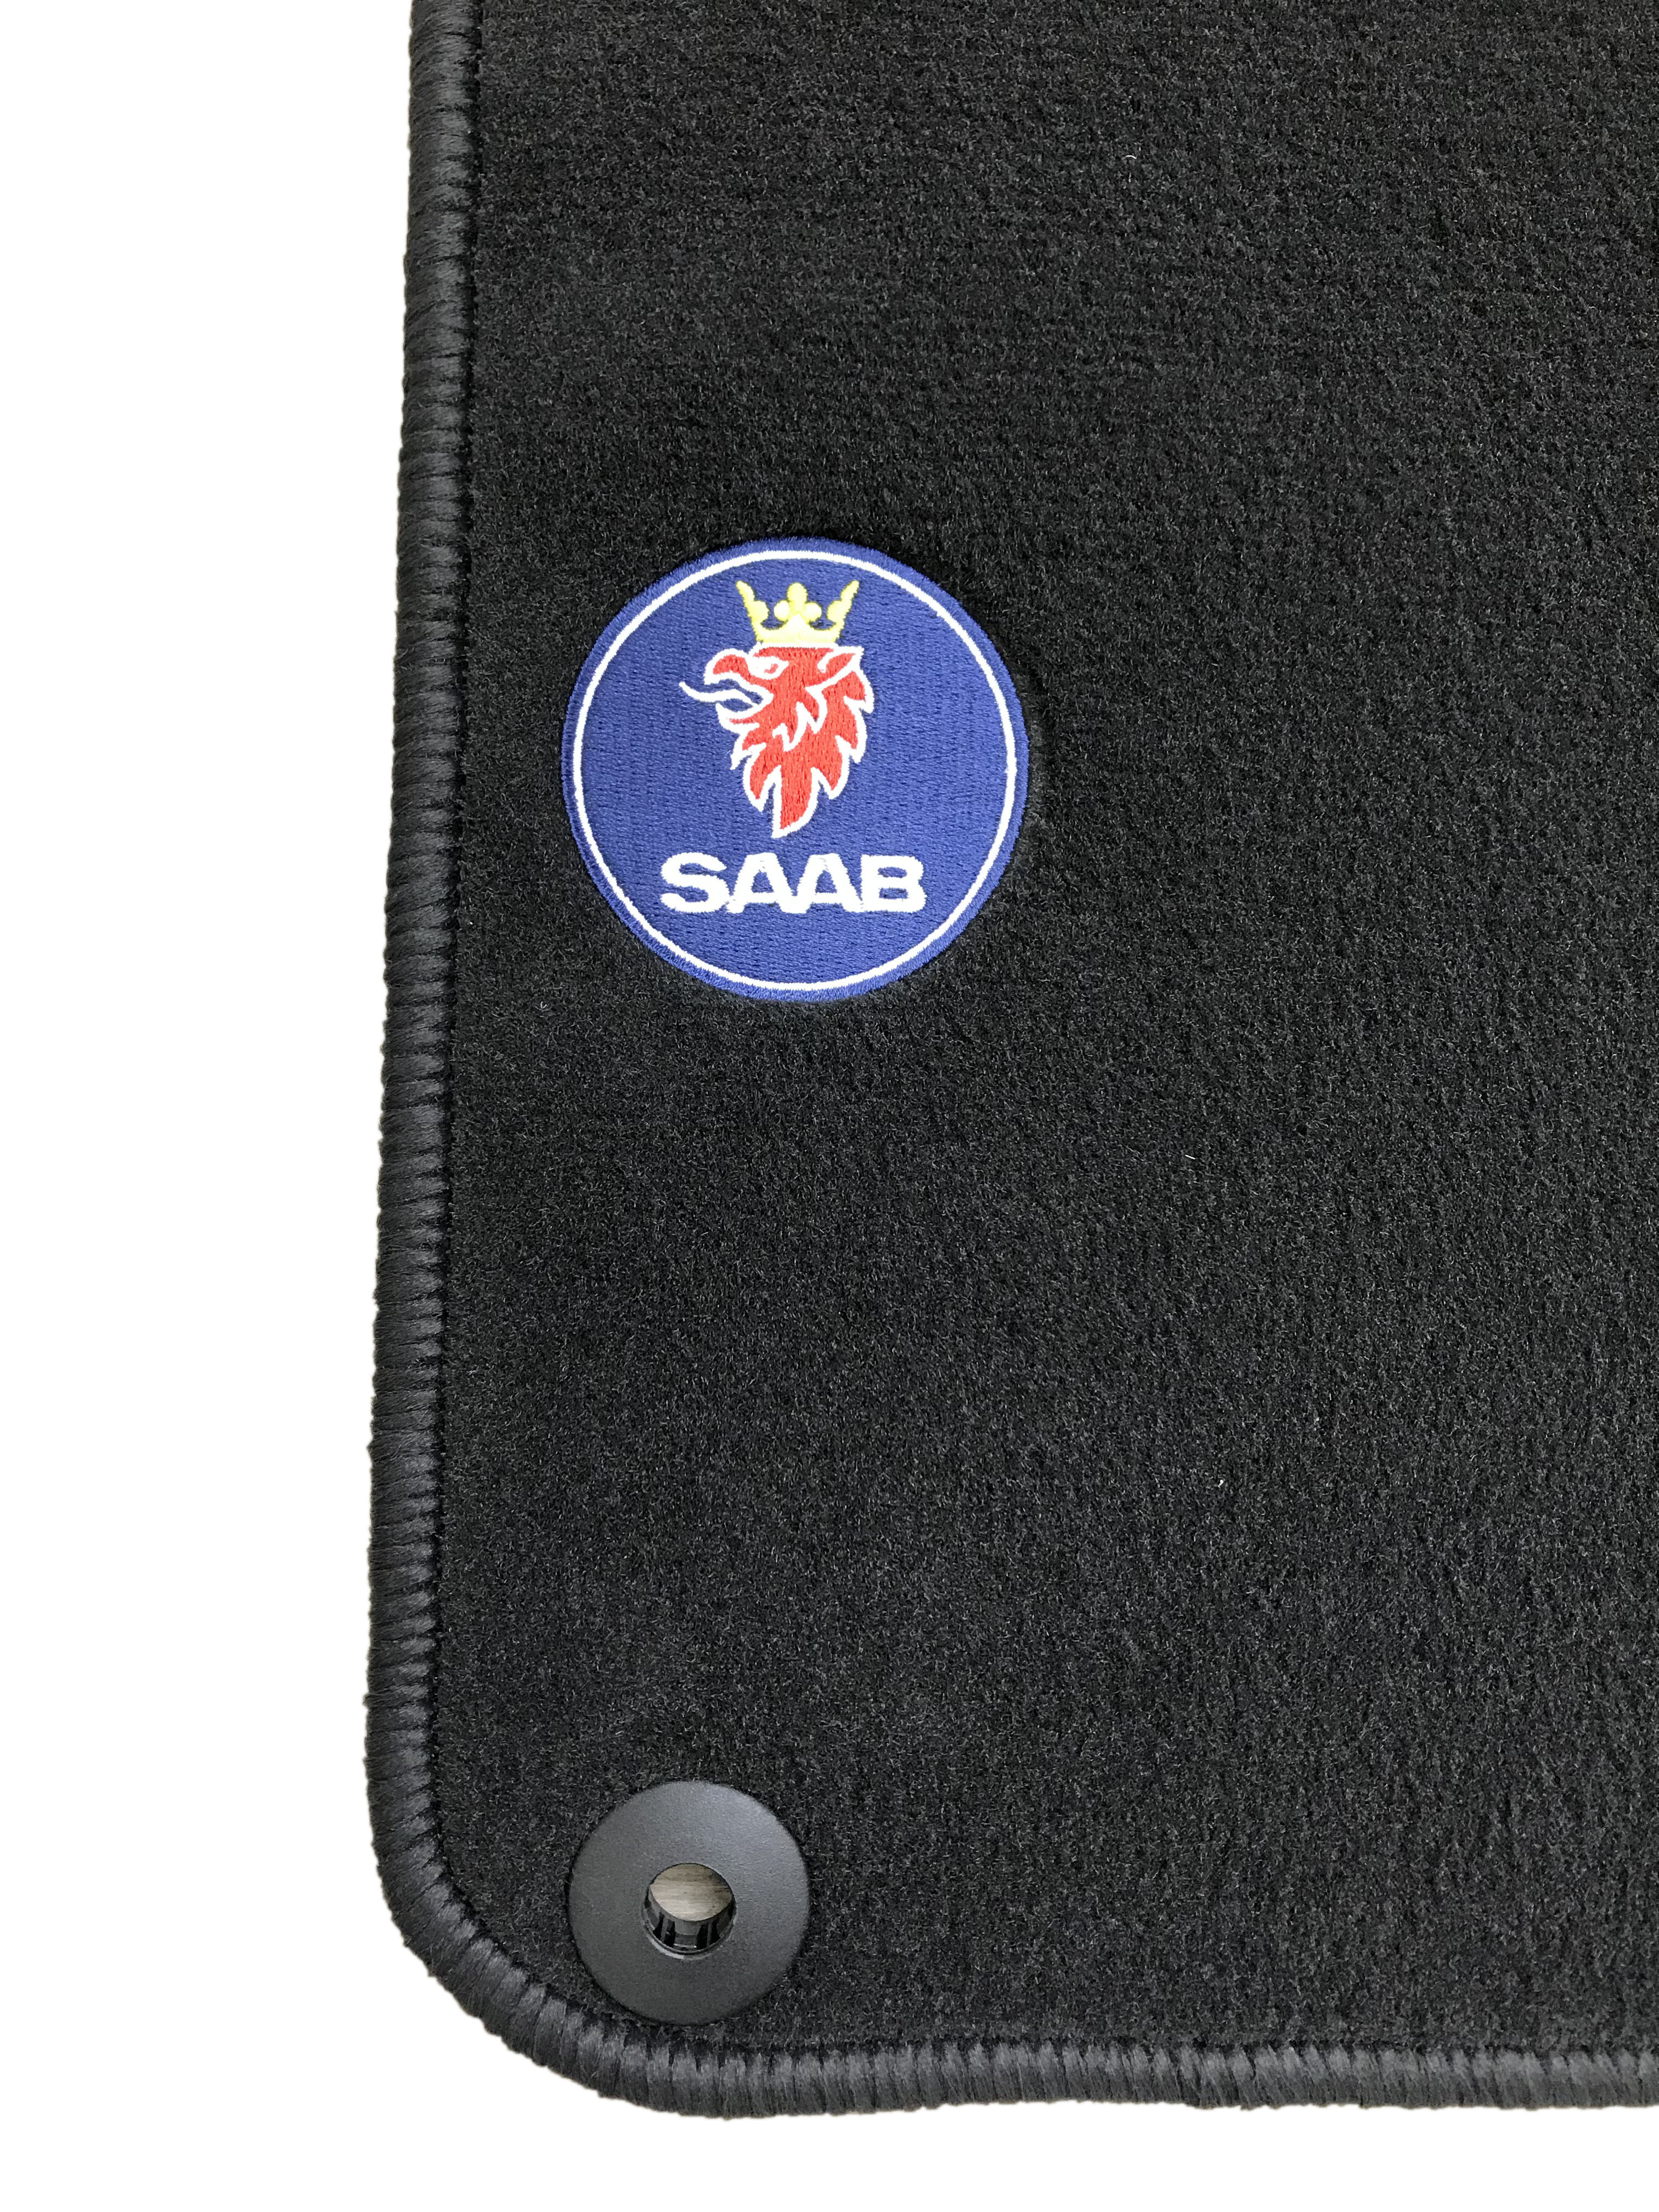 Saab 9.3 automat met logo va. 2008 (mattenset van 4 stuks)